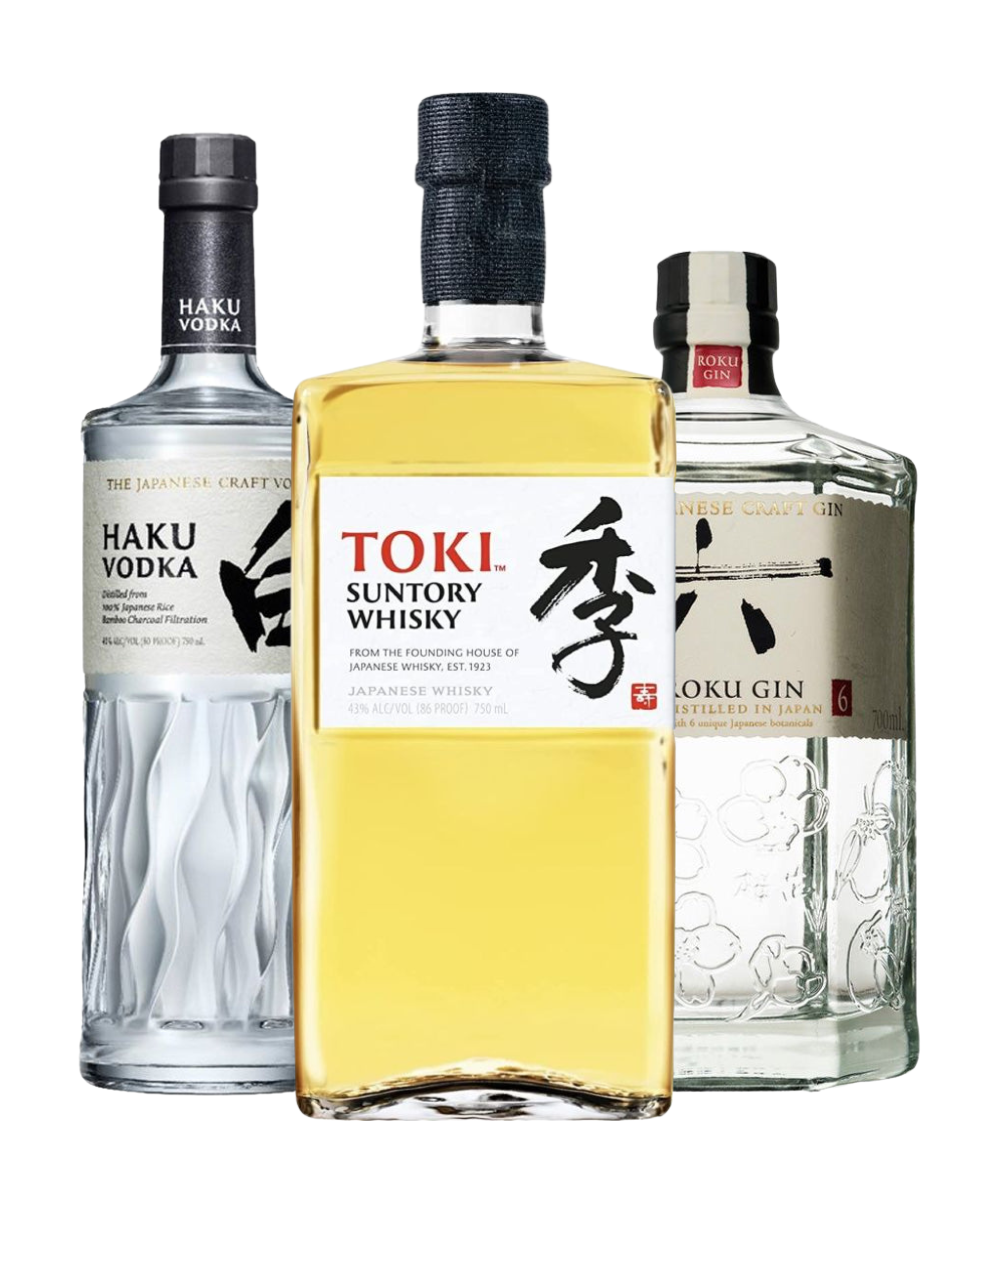 Suntory Whisky and Haku Roku ReserveBar Toki Vodka | Gin with